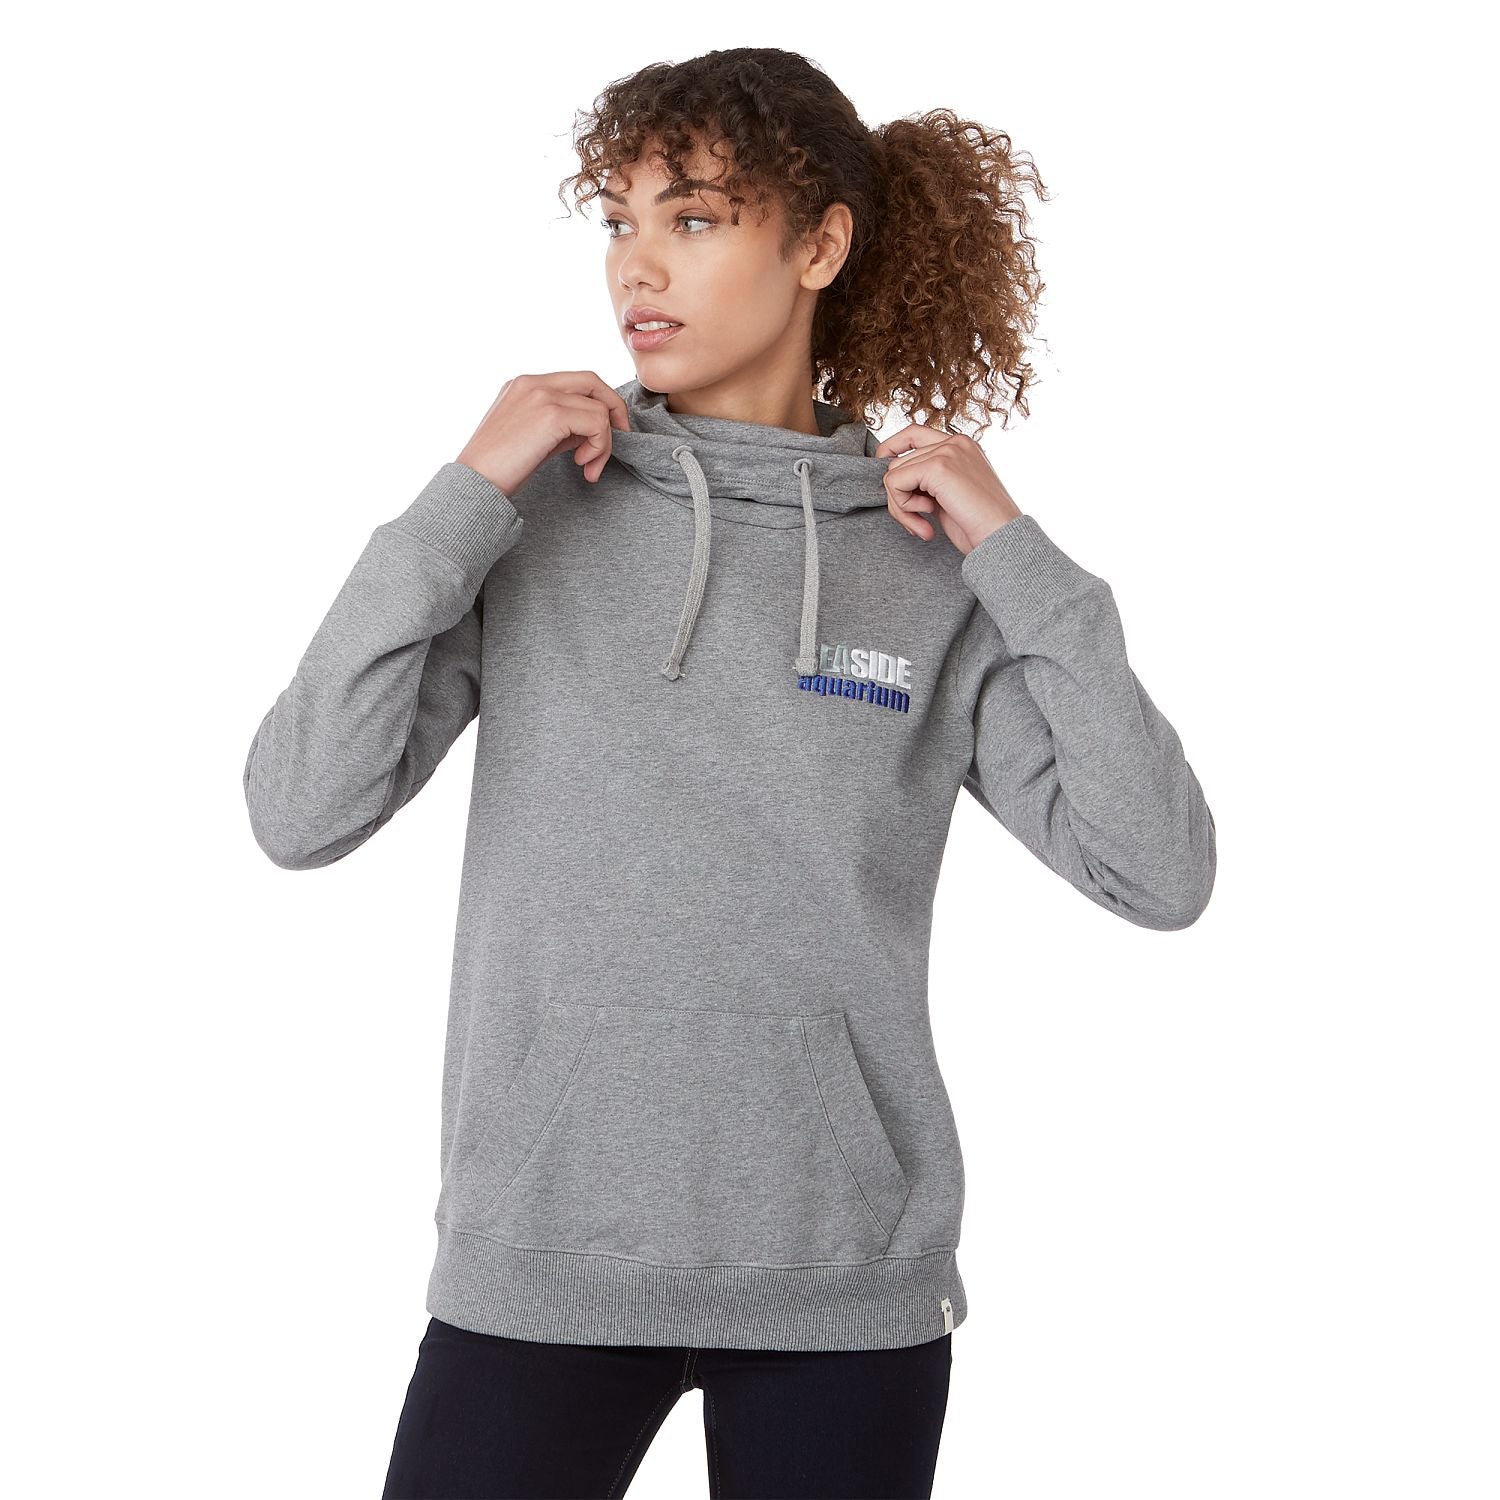 Customizable Tentree women's organic cotton banshee hoodie in heather gray.